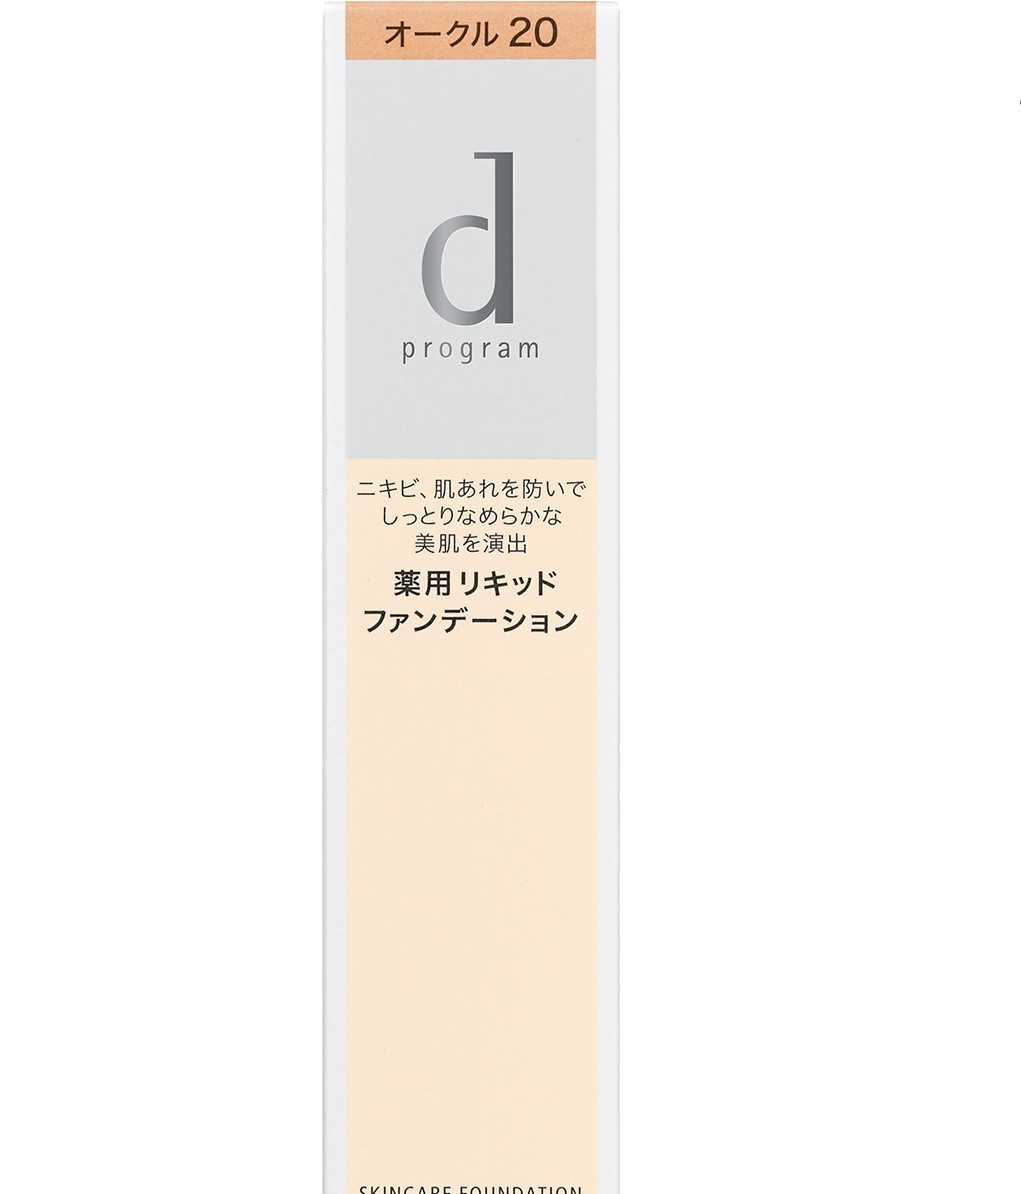 * Shiseido одобрено магазин d program лекарство для уход за кожей основа ( жидкий ) дуб ru20[ бесплатная доставка ]